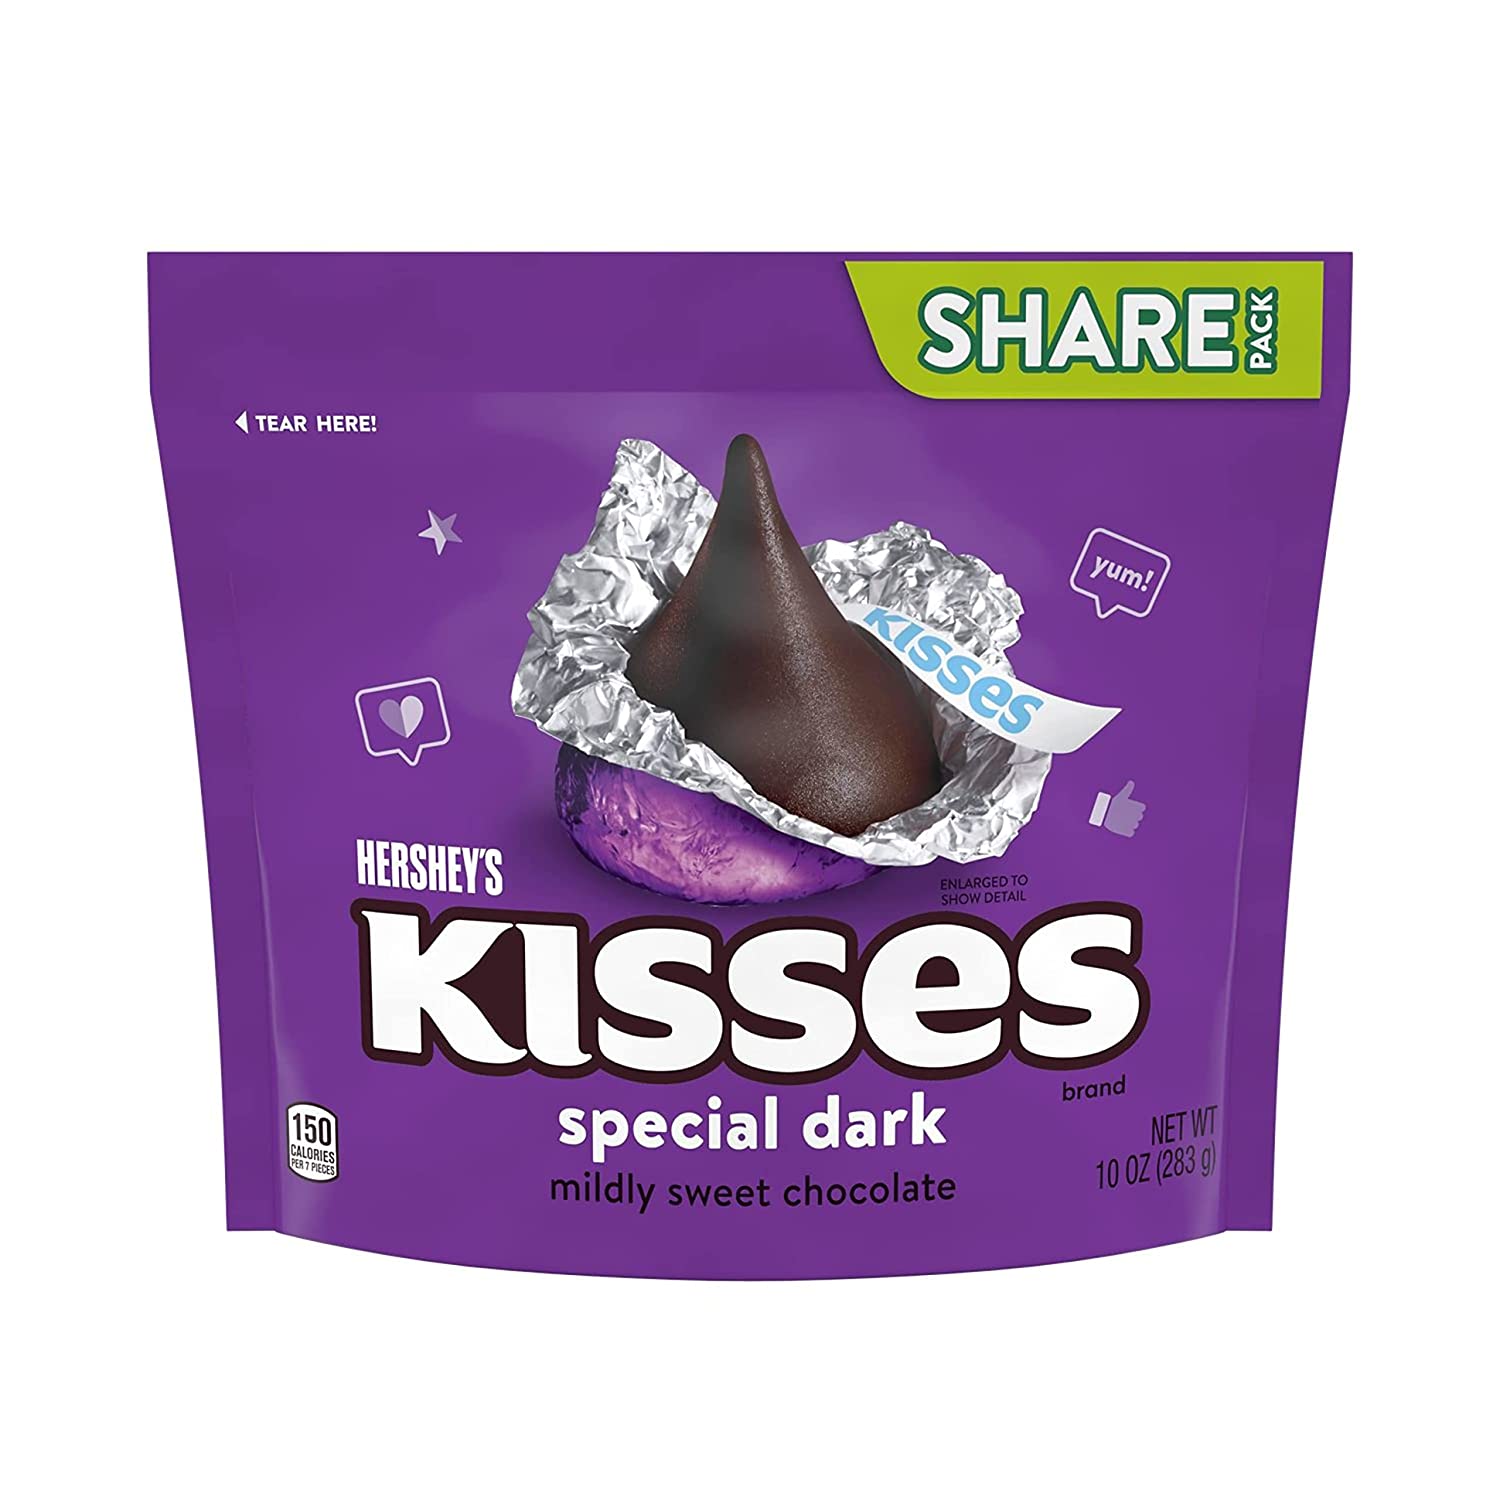 Kisses special dark